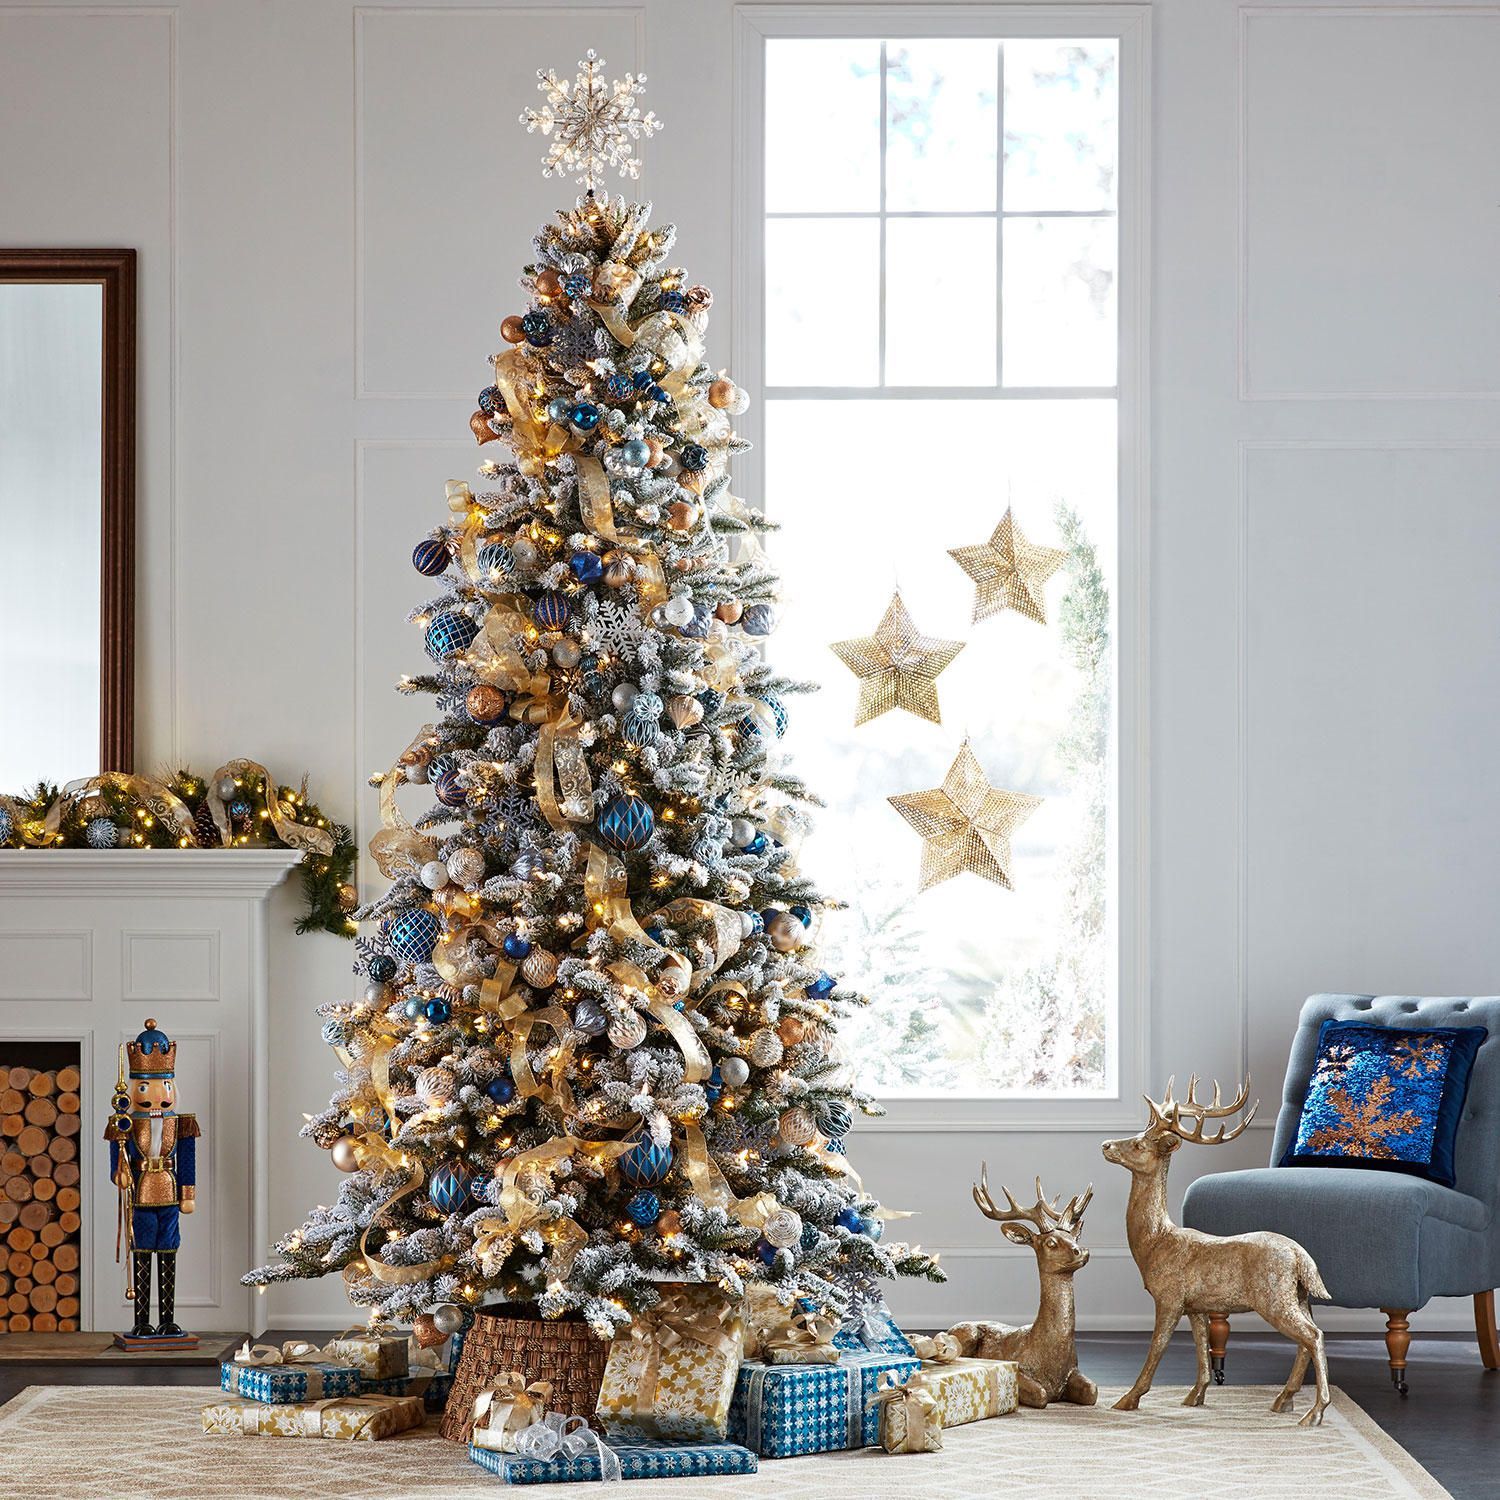 Member's Mark 9' Grand Spruce Christmas Tree - Sam's Club -   19 christmas tree themes 2020 ideas